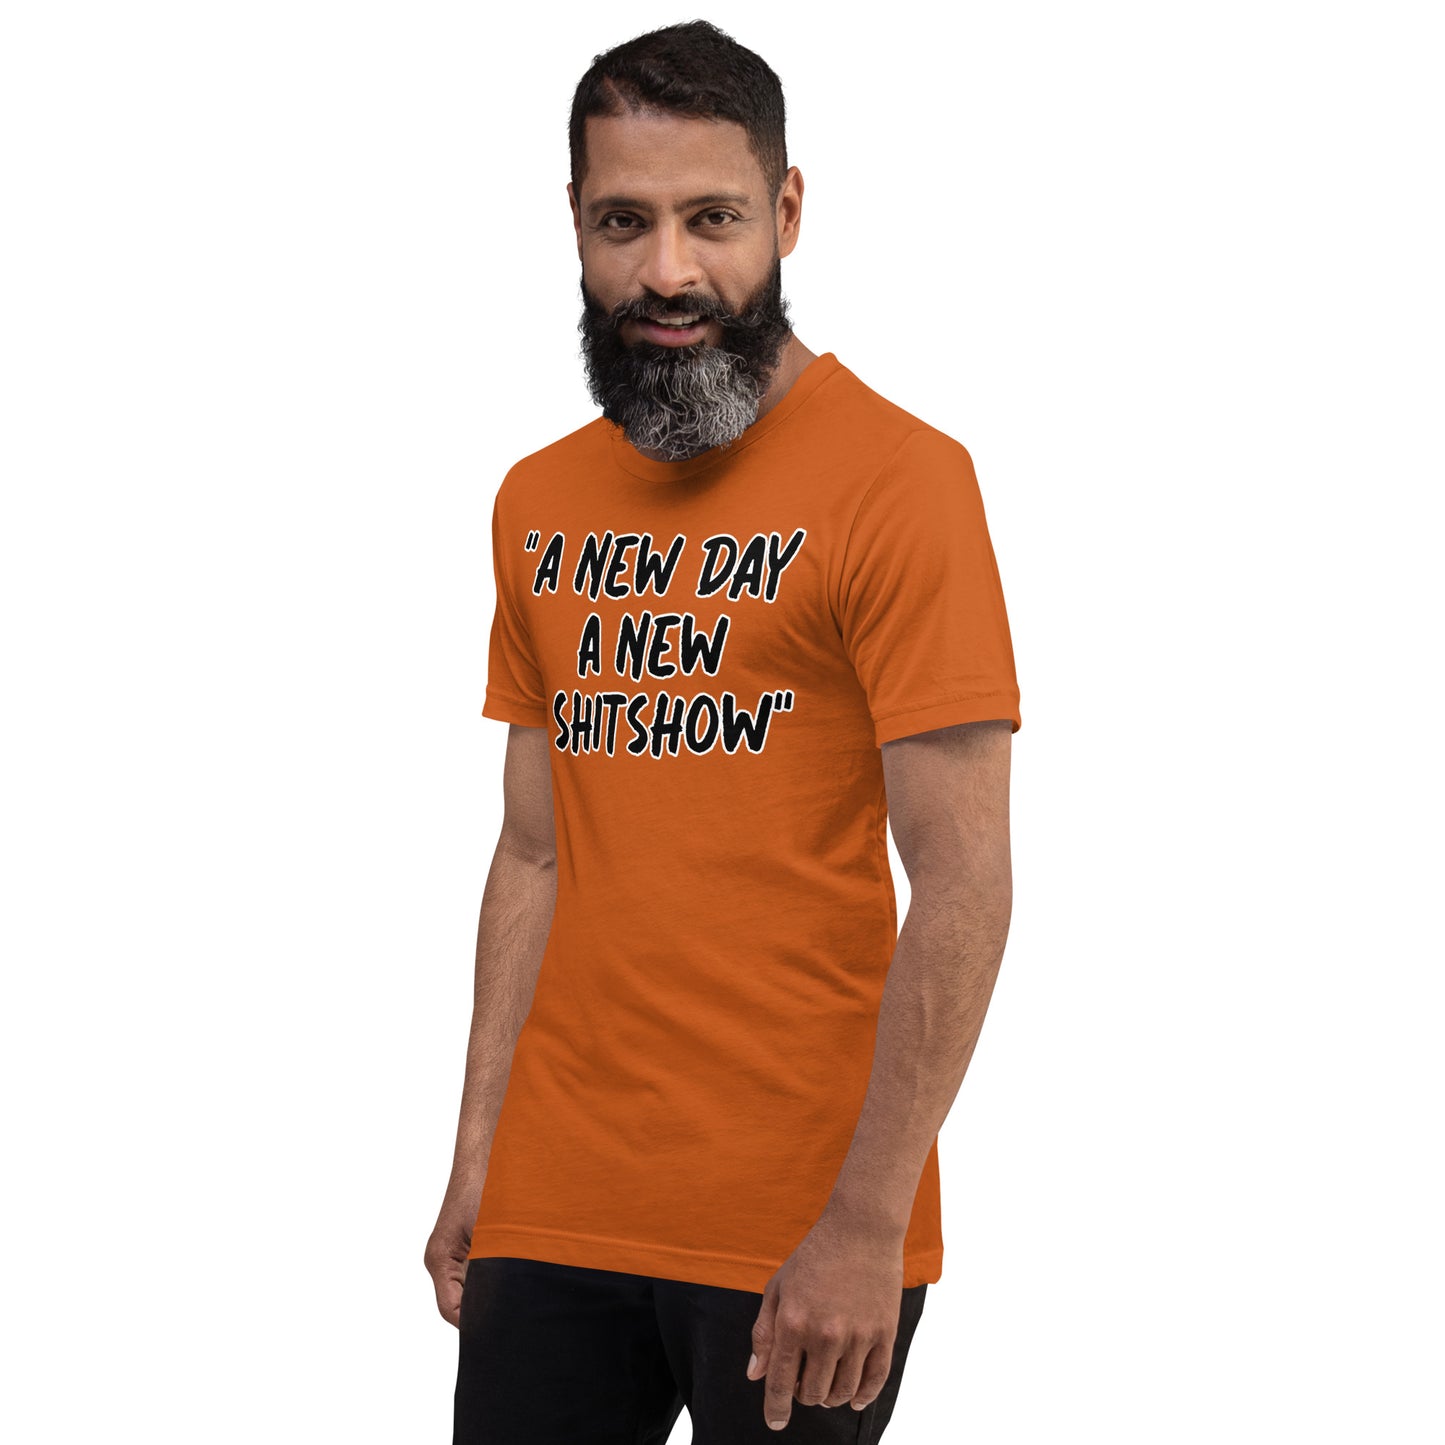 A New Day Show T-shirt